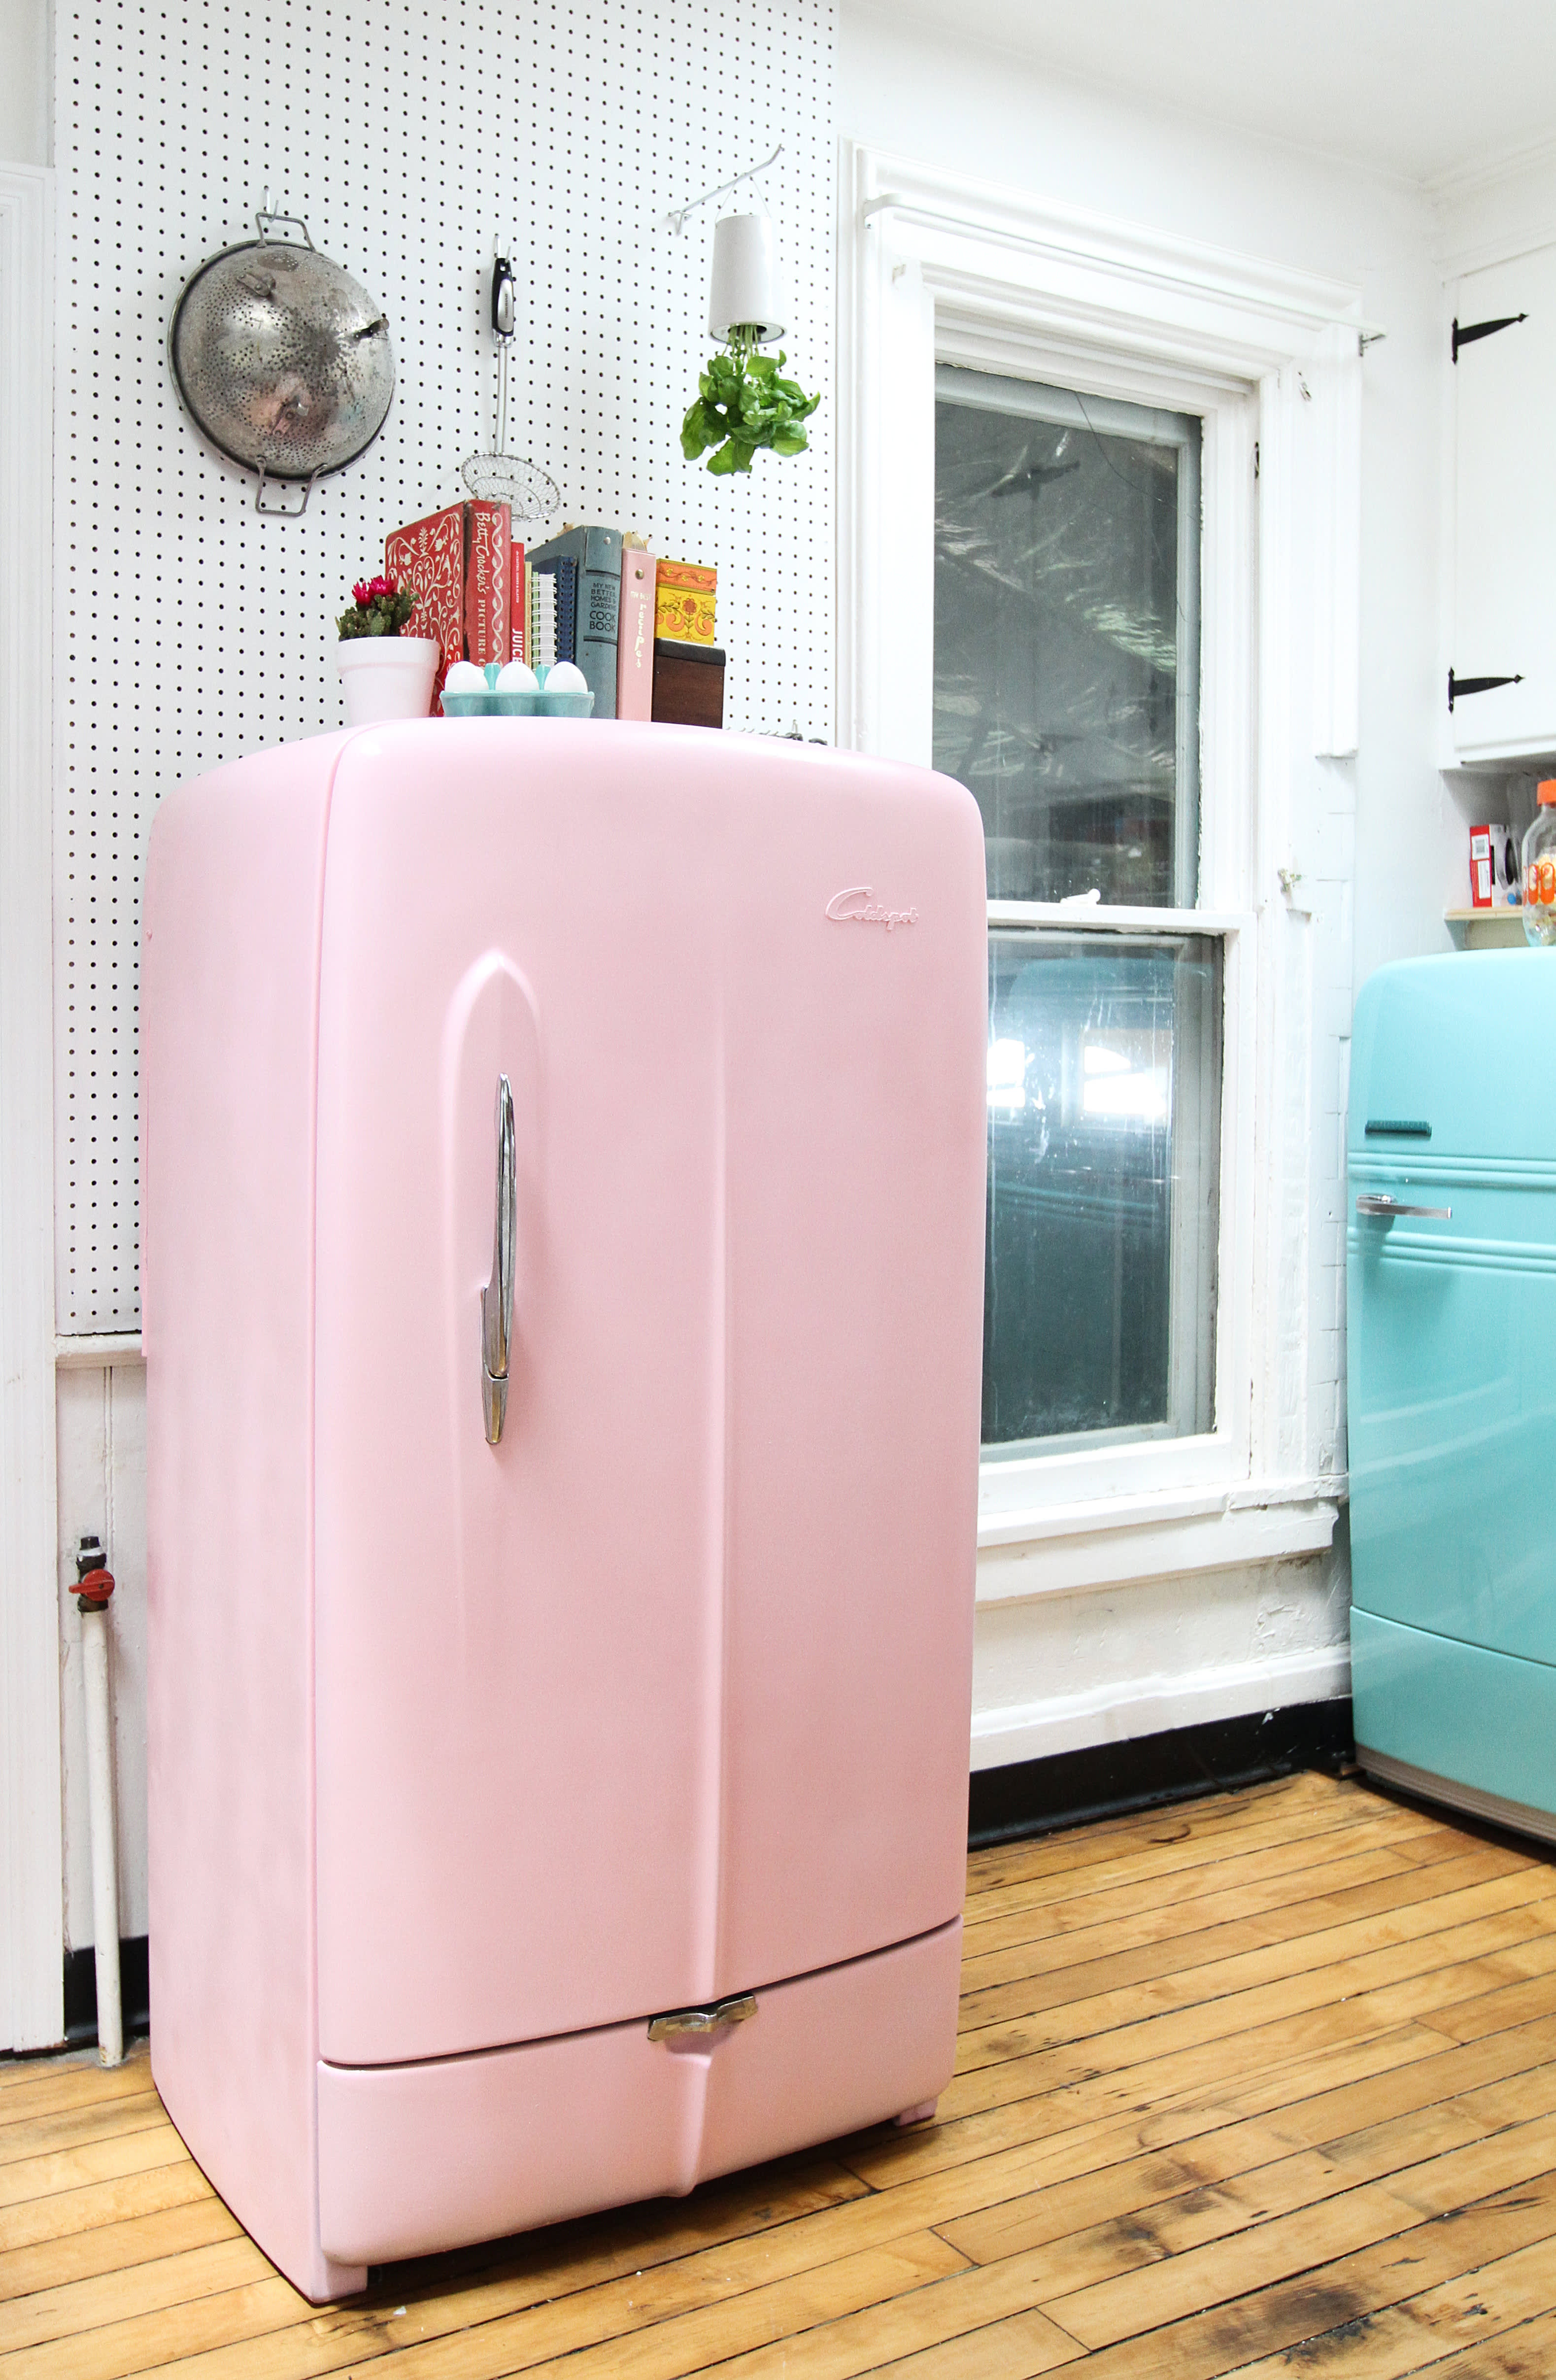 Before & After: Vintage Repainted Refrigerator